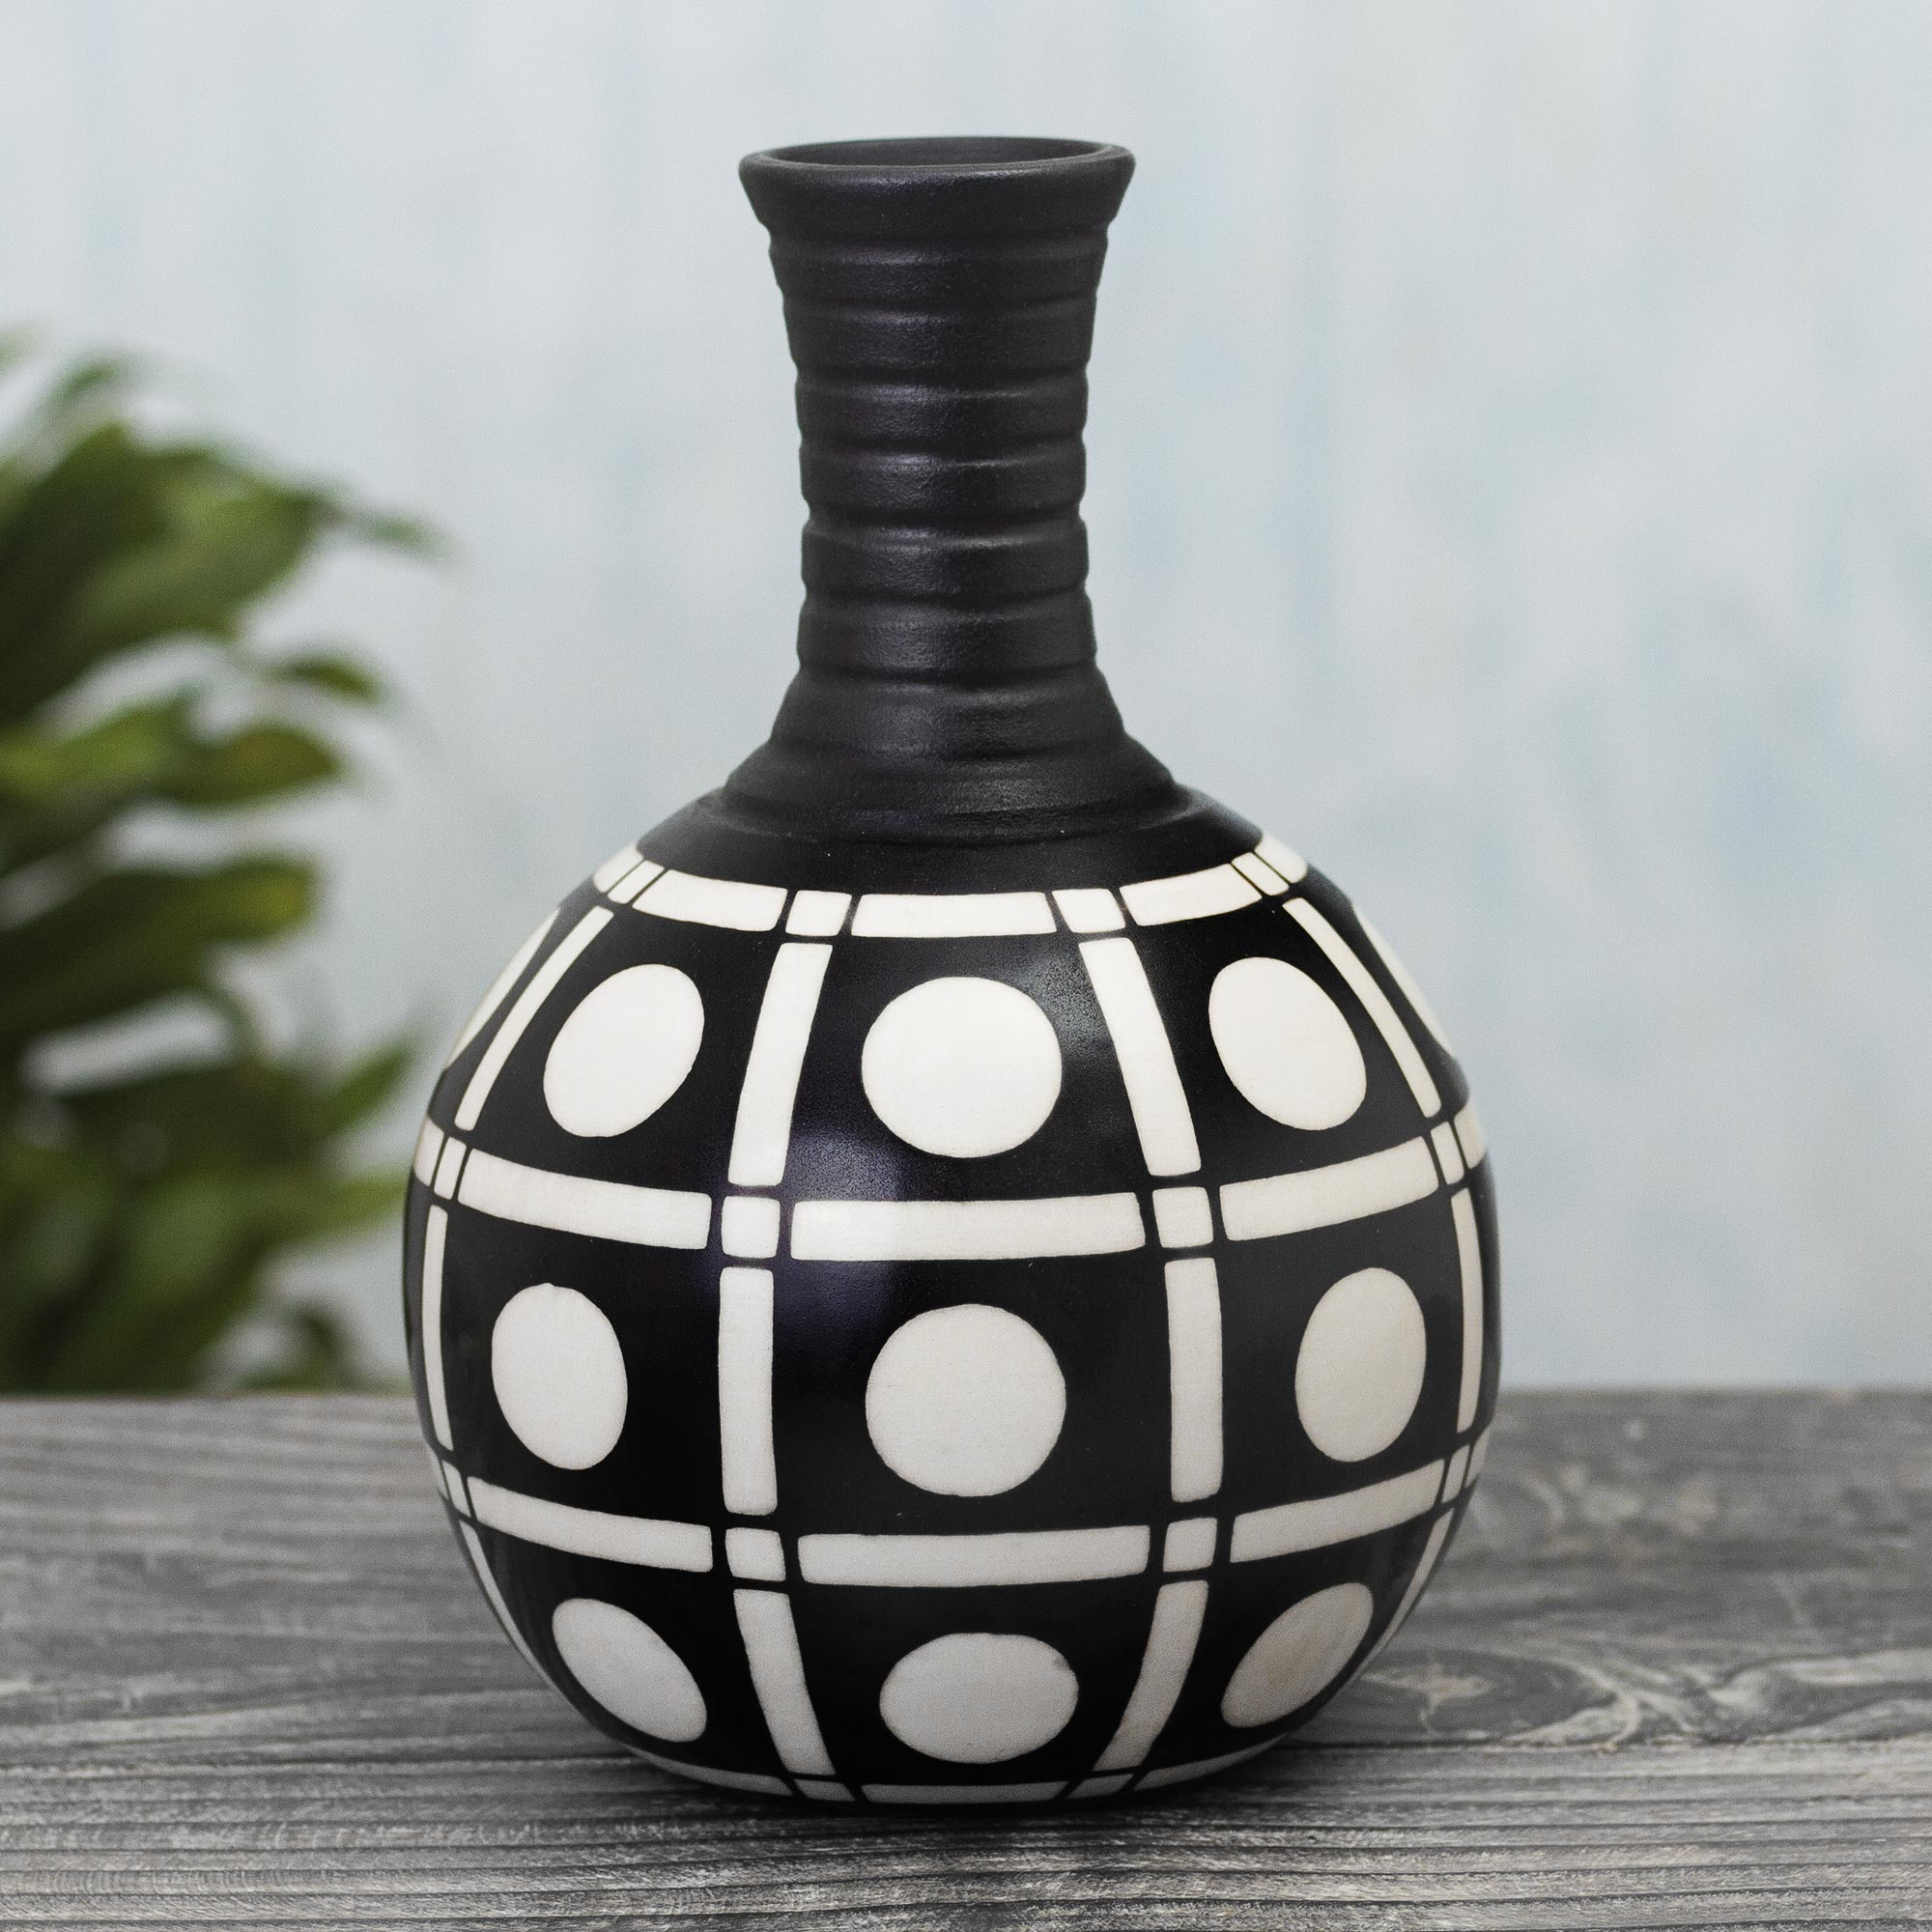 Square Motif Chulucanas Ceramic Decorative Vase from Peru - Chulucanas Squares NOVICA